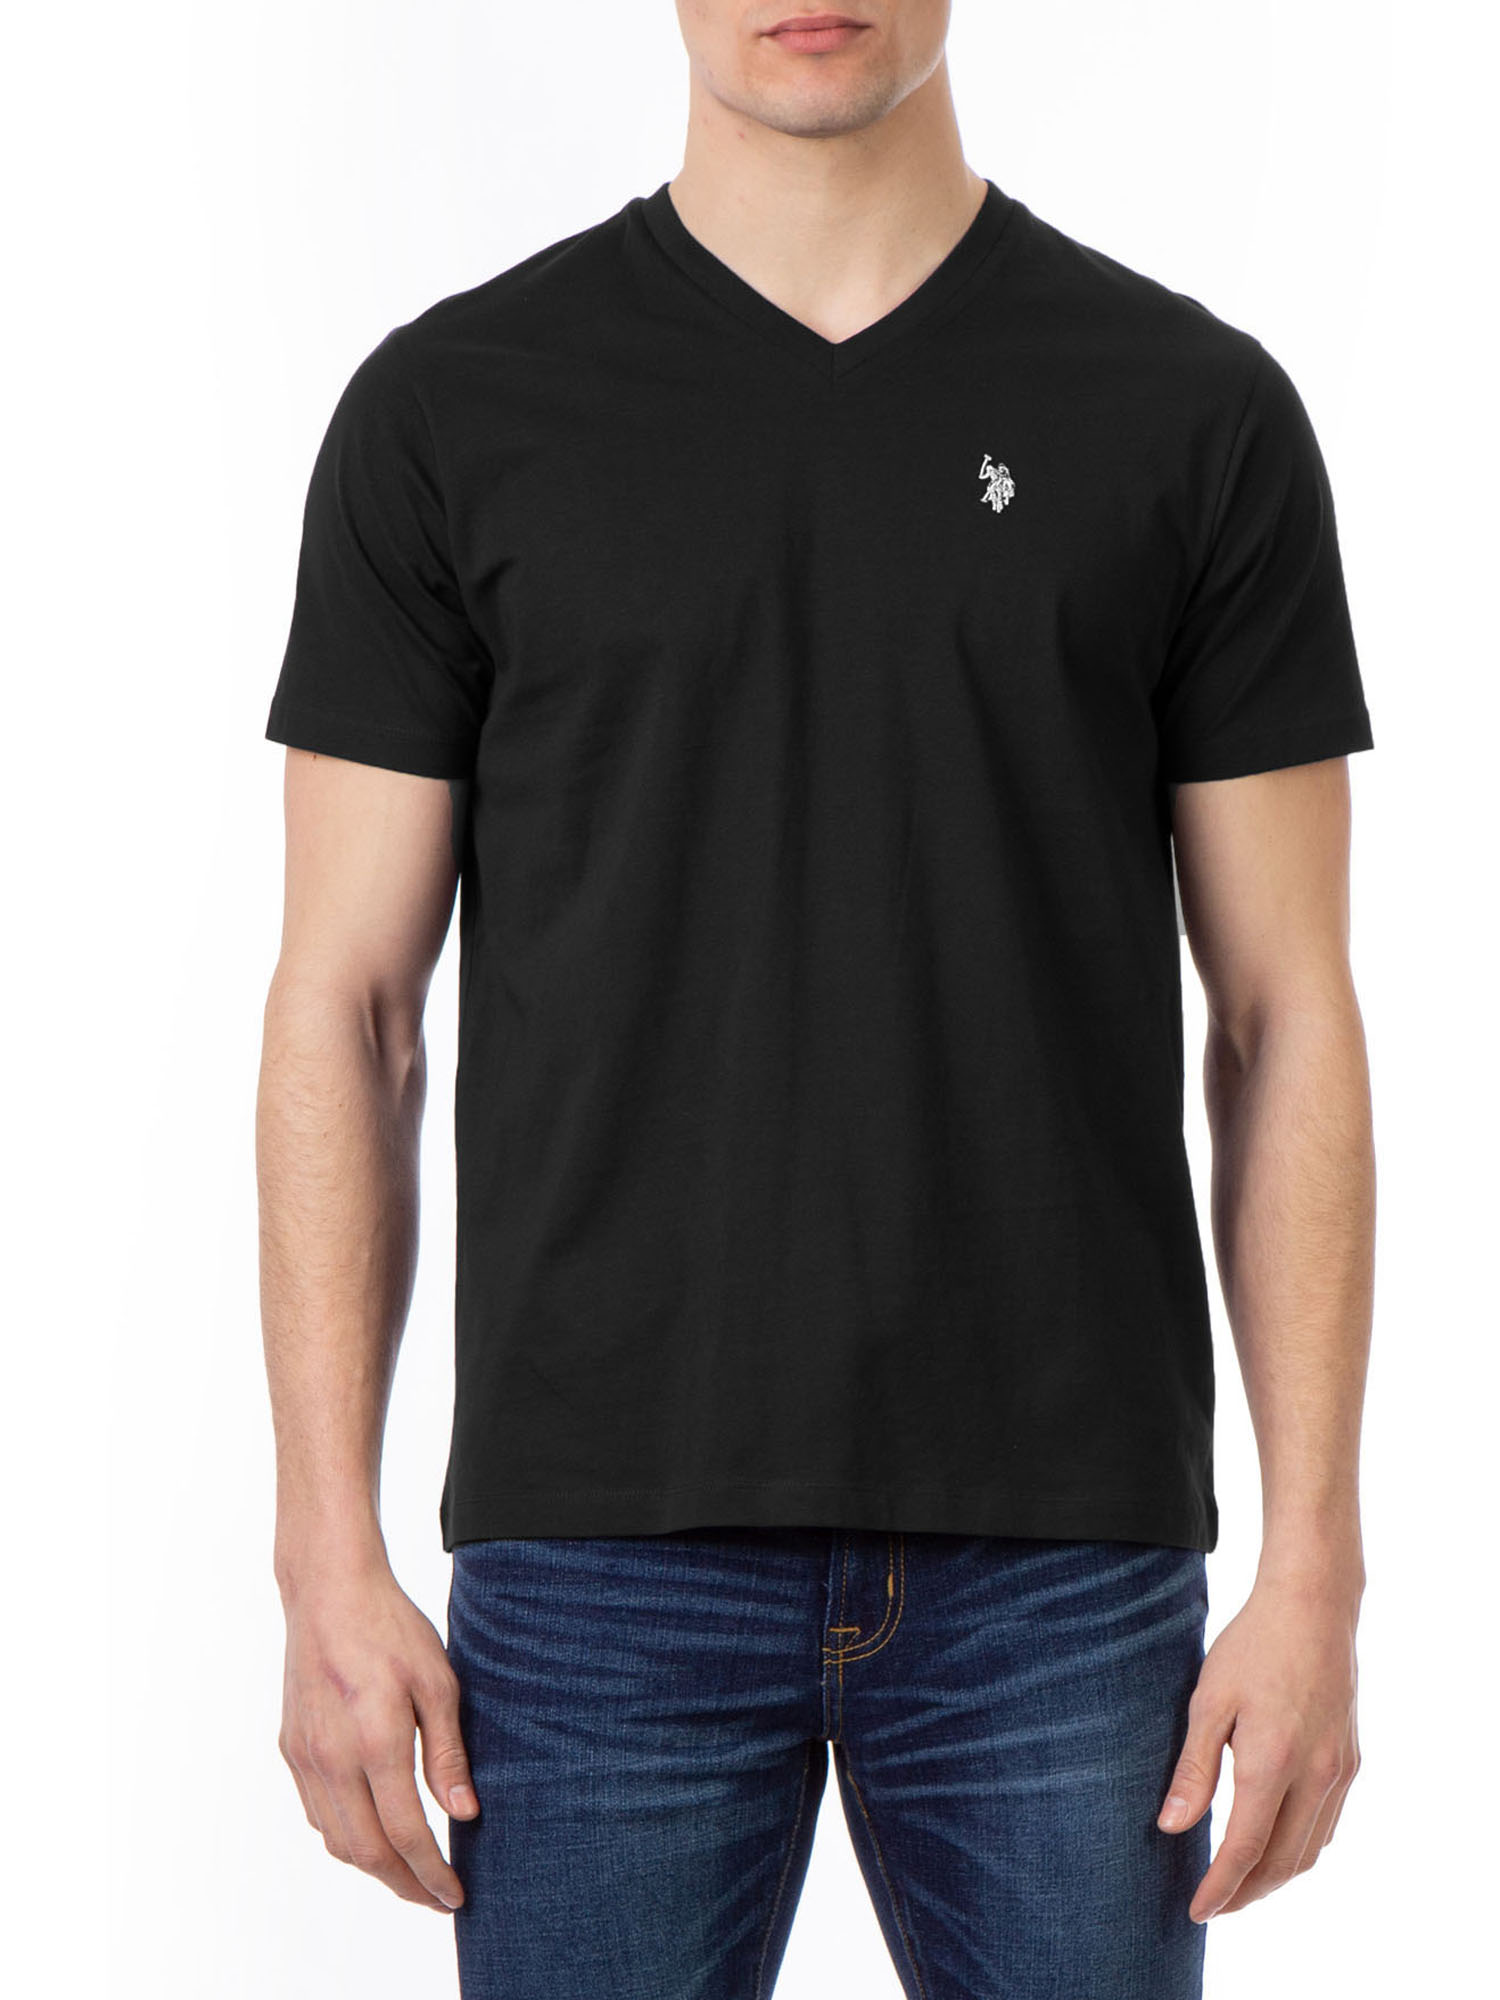 U.S. Polo Assn. Men's V-Neck T-Shirt - image 1 of 3